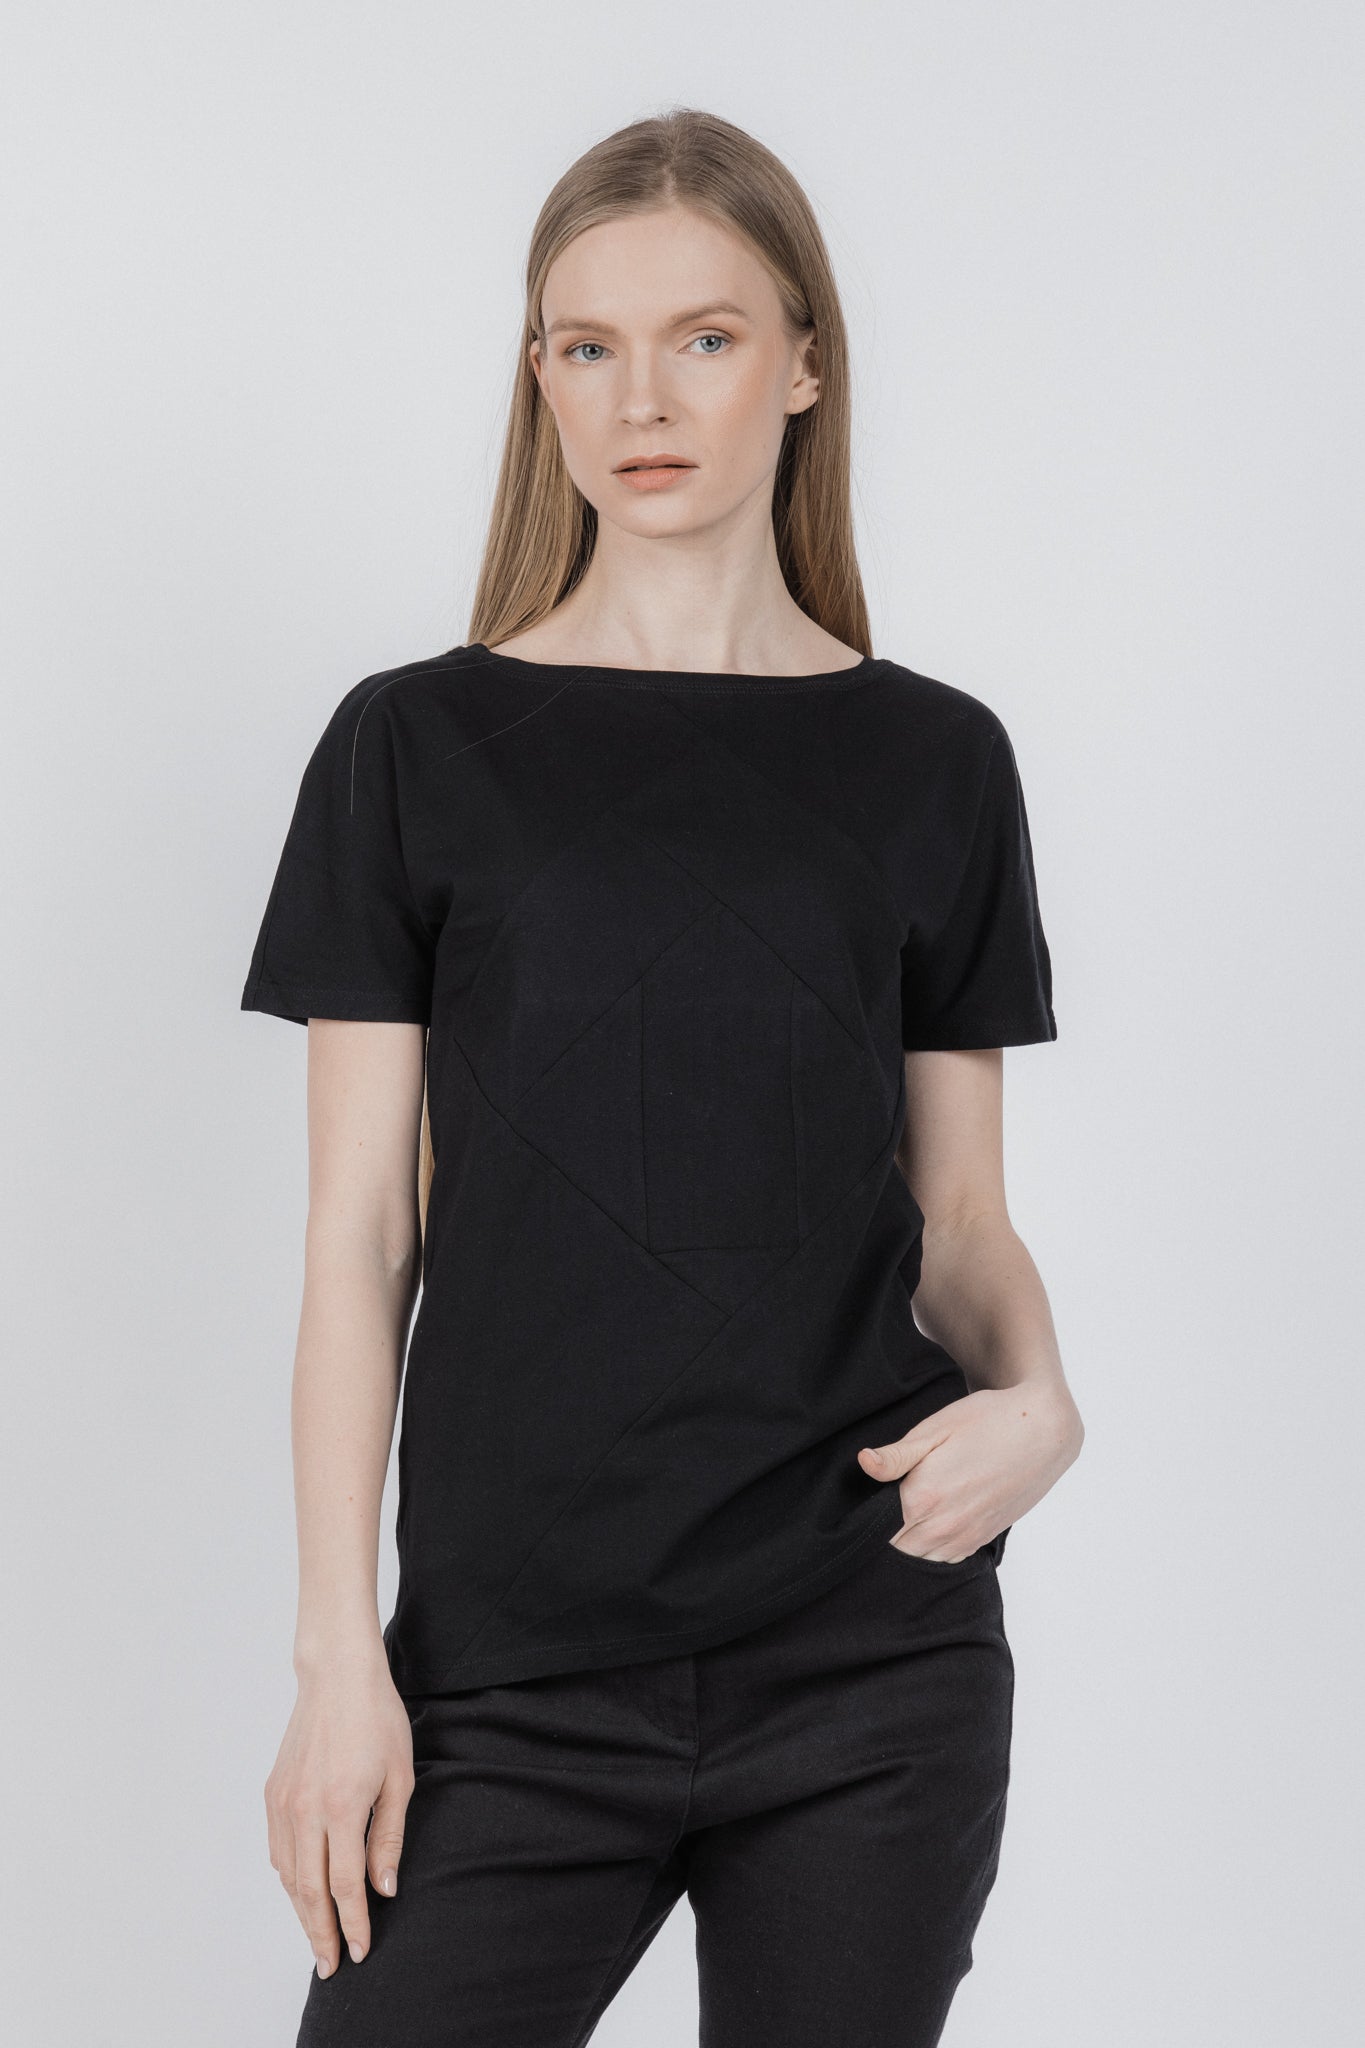 Reet Aus Up-shirt for women, black on black